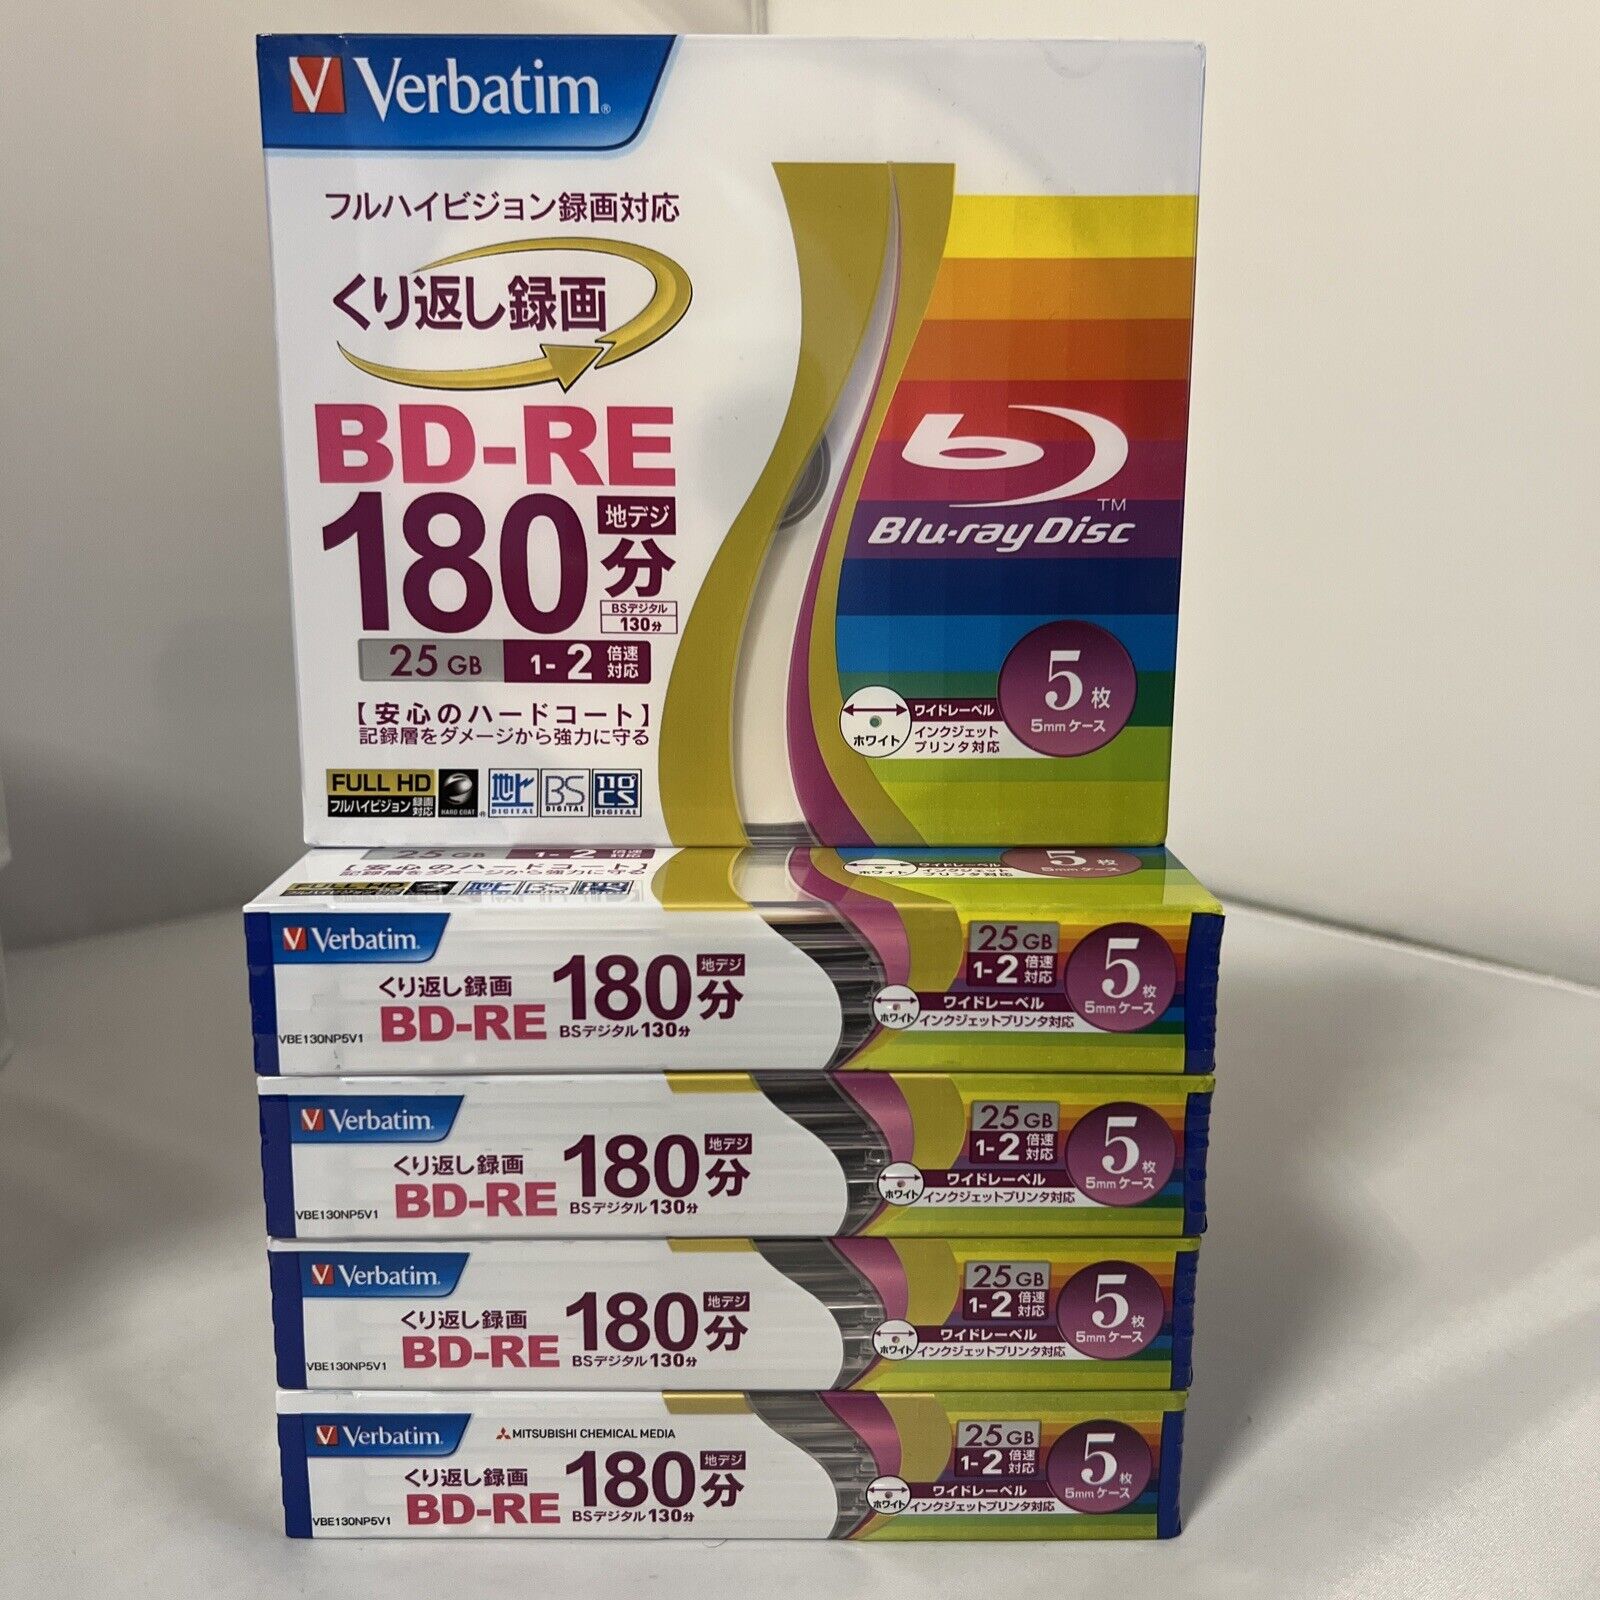 New Verbatim Blu-ray Disc BD-RE 25GB - Lot Of 5 Packs Of 5 pcs each - Japan